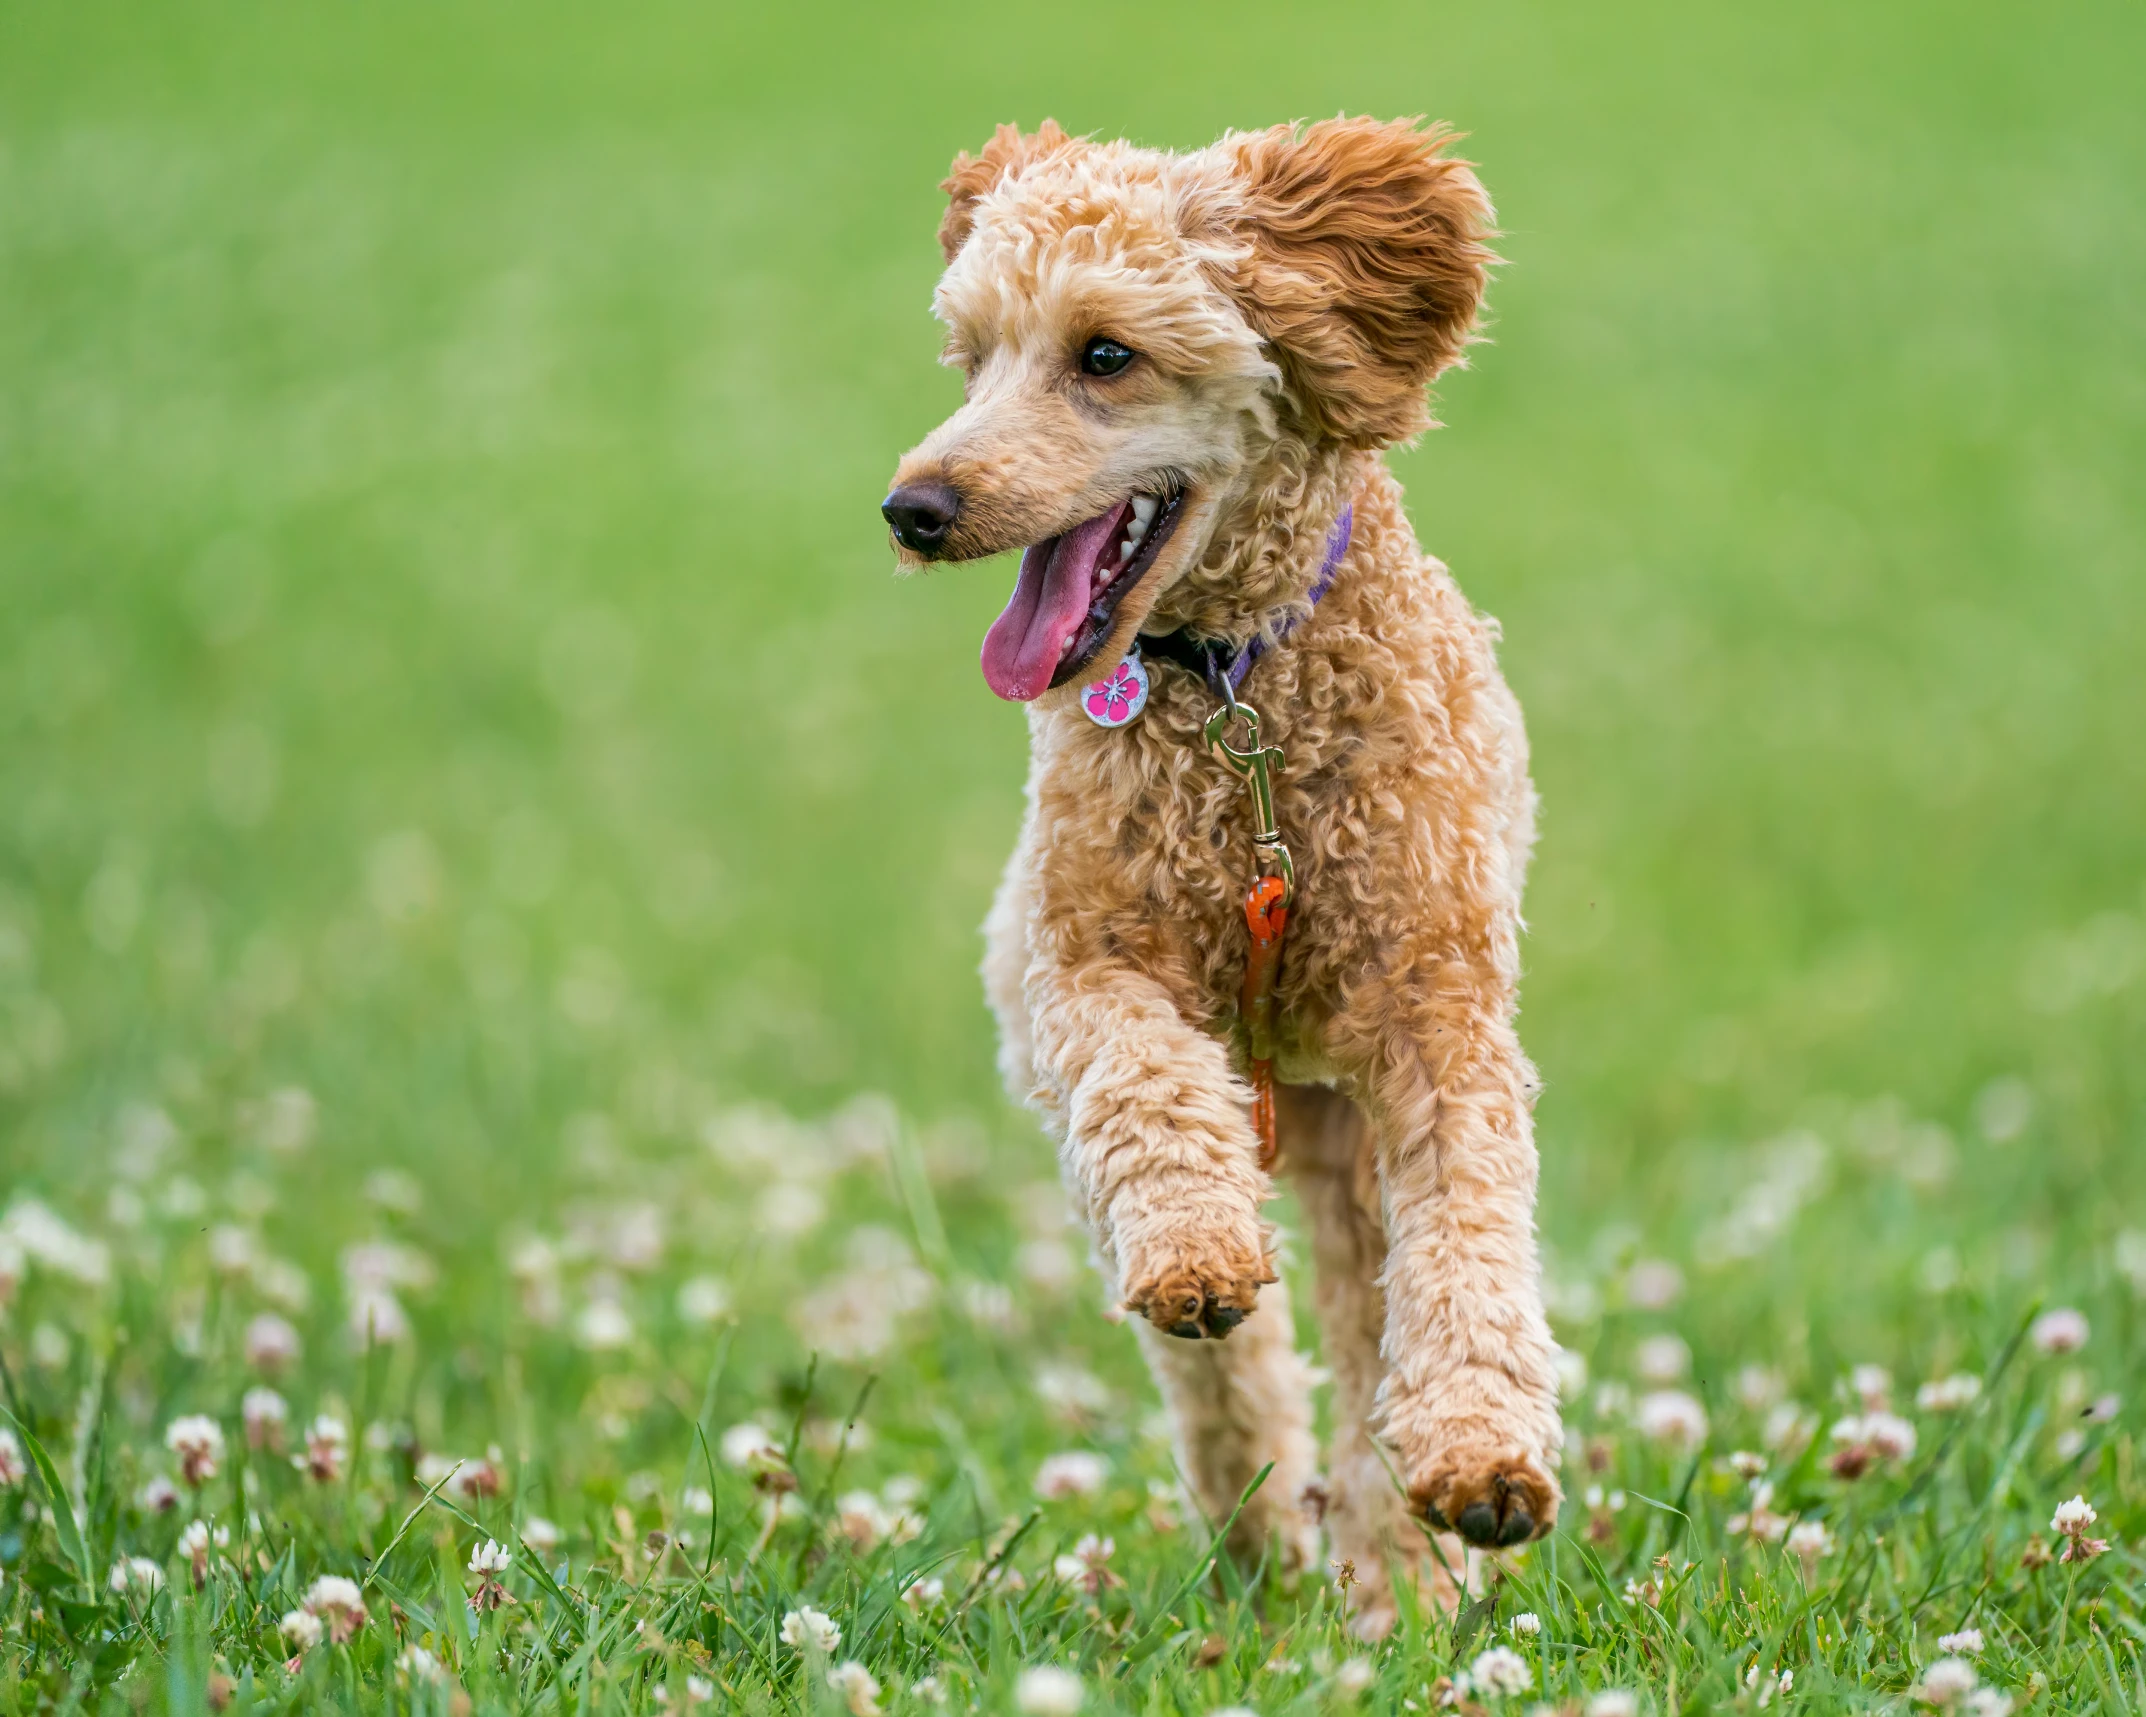 an orange dog is running through a field